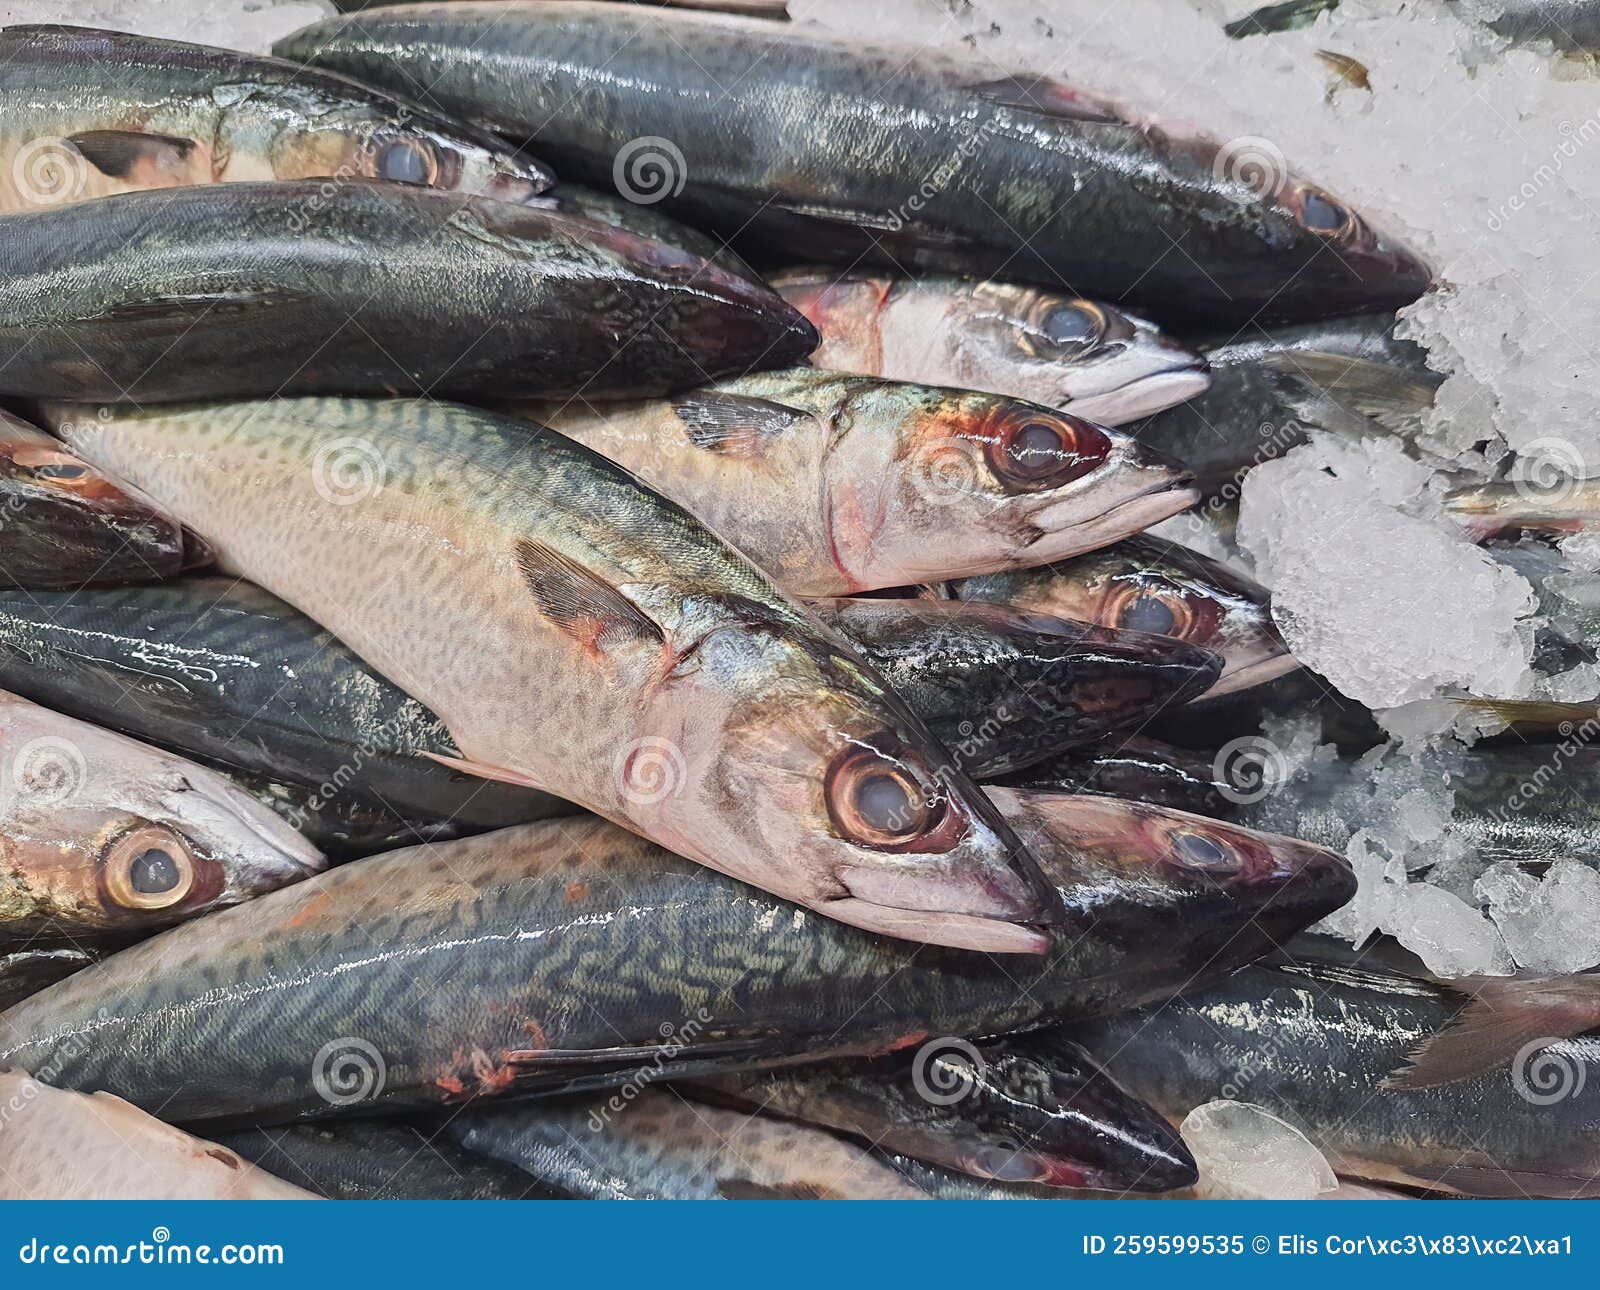 Several Atlantic Mackerel Fish on Crushed Ice at a Market Stock